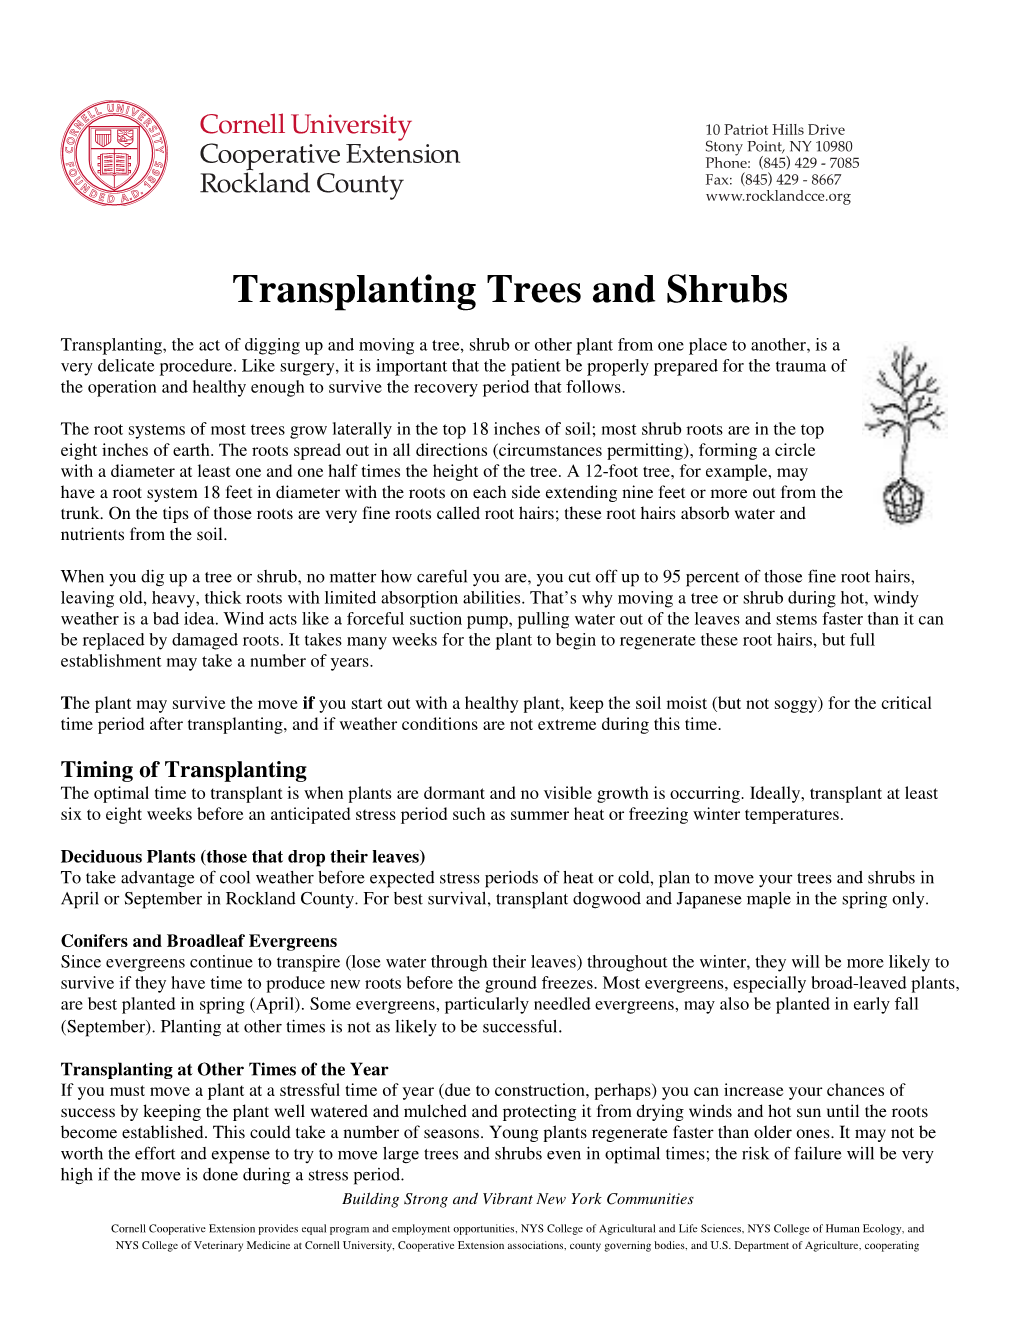 Transplanting Trees and Shrubs